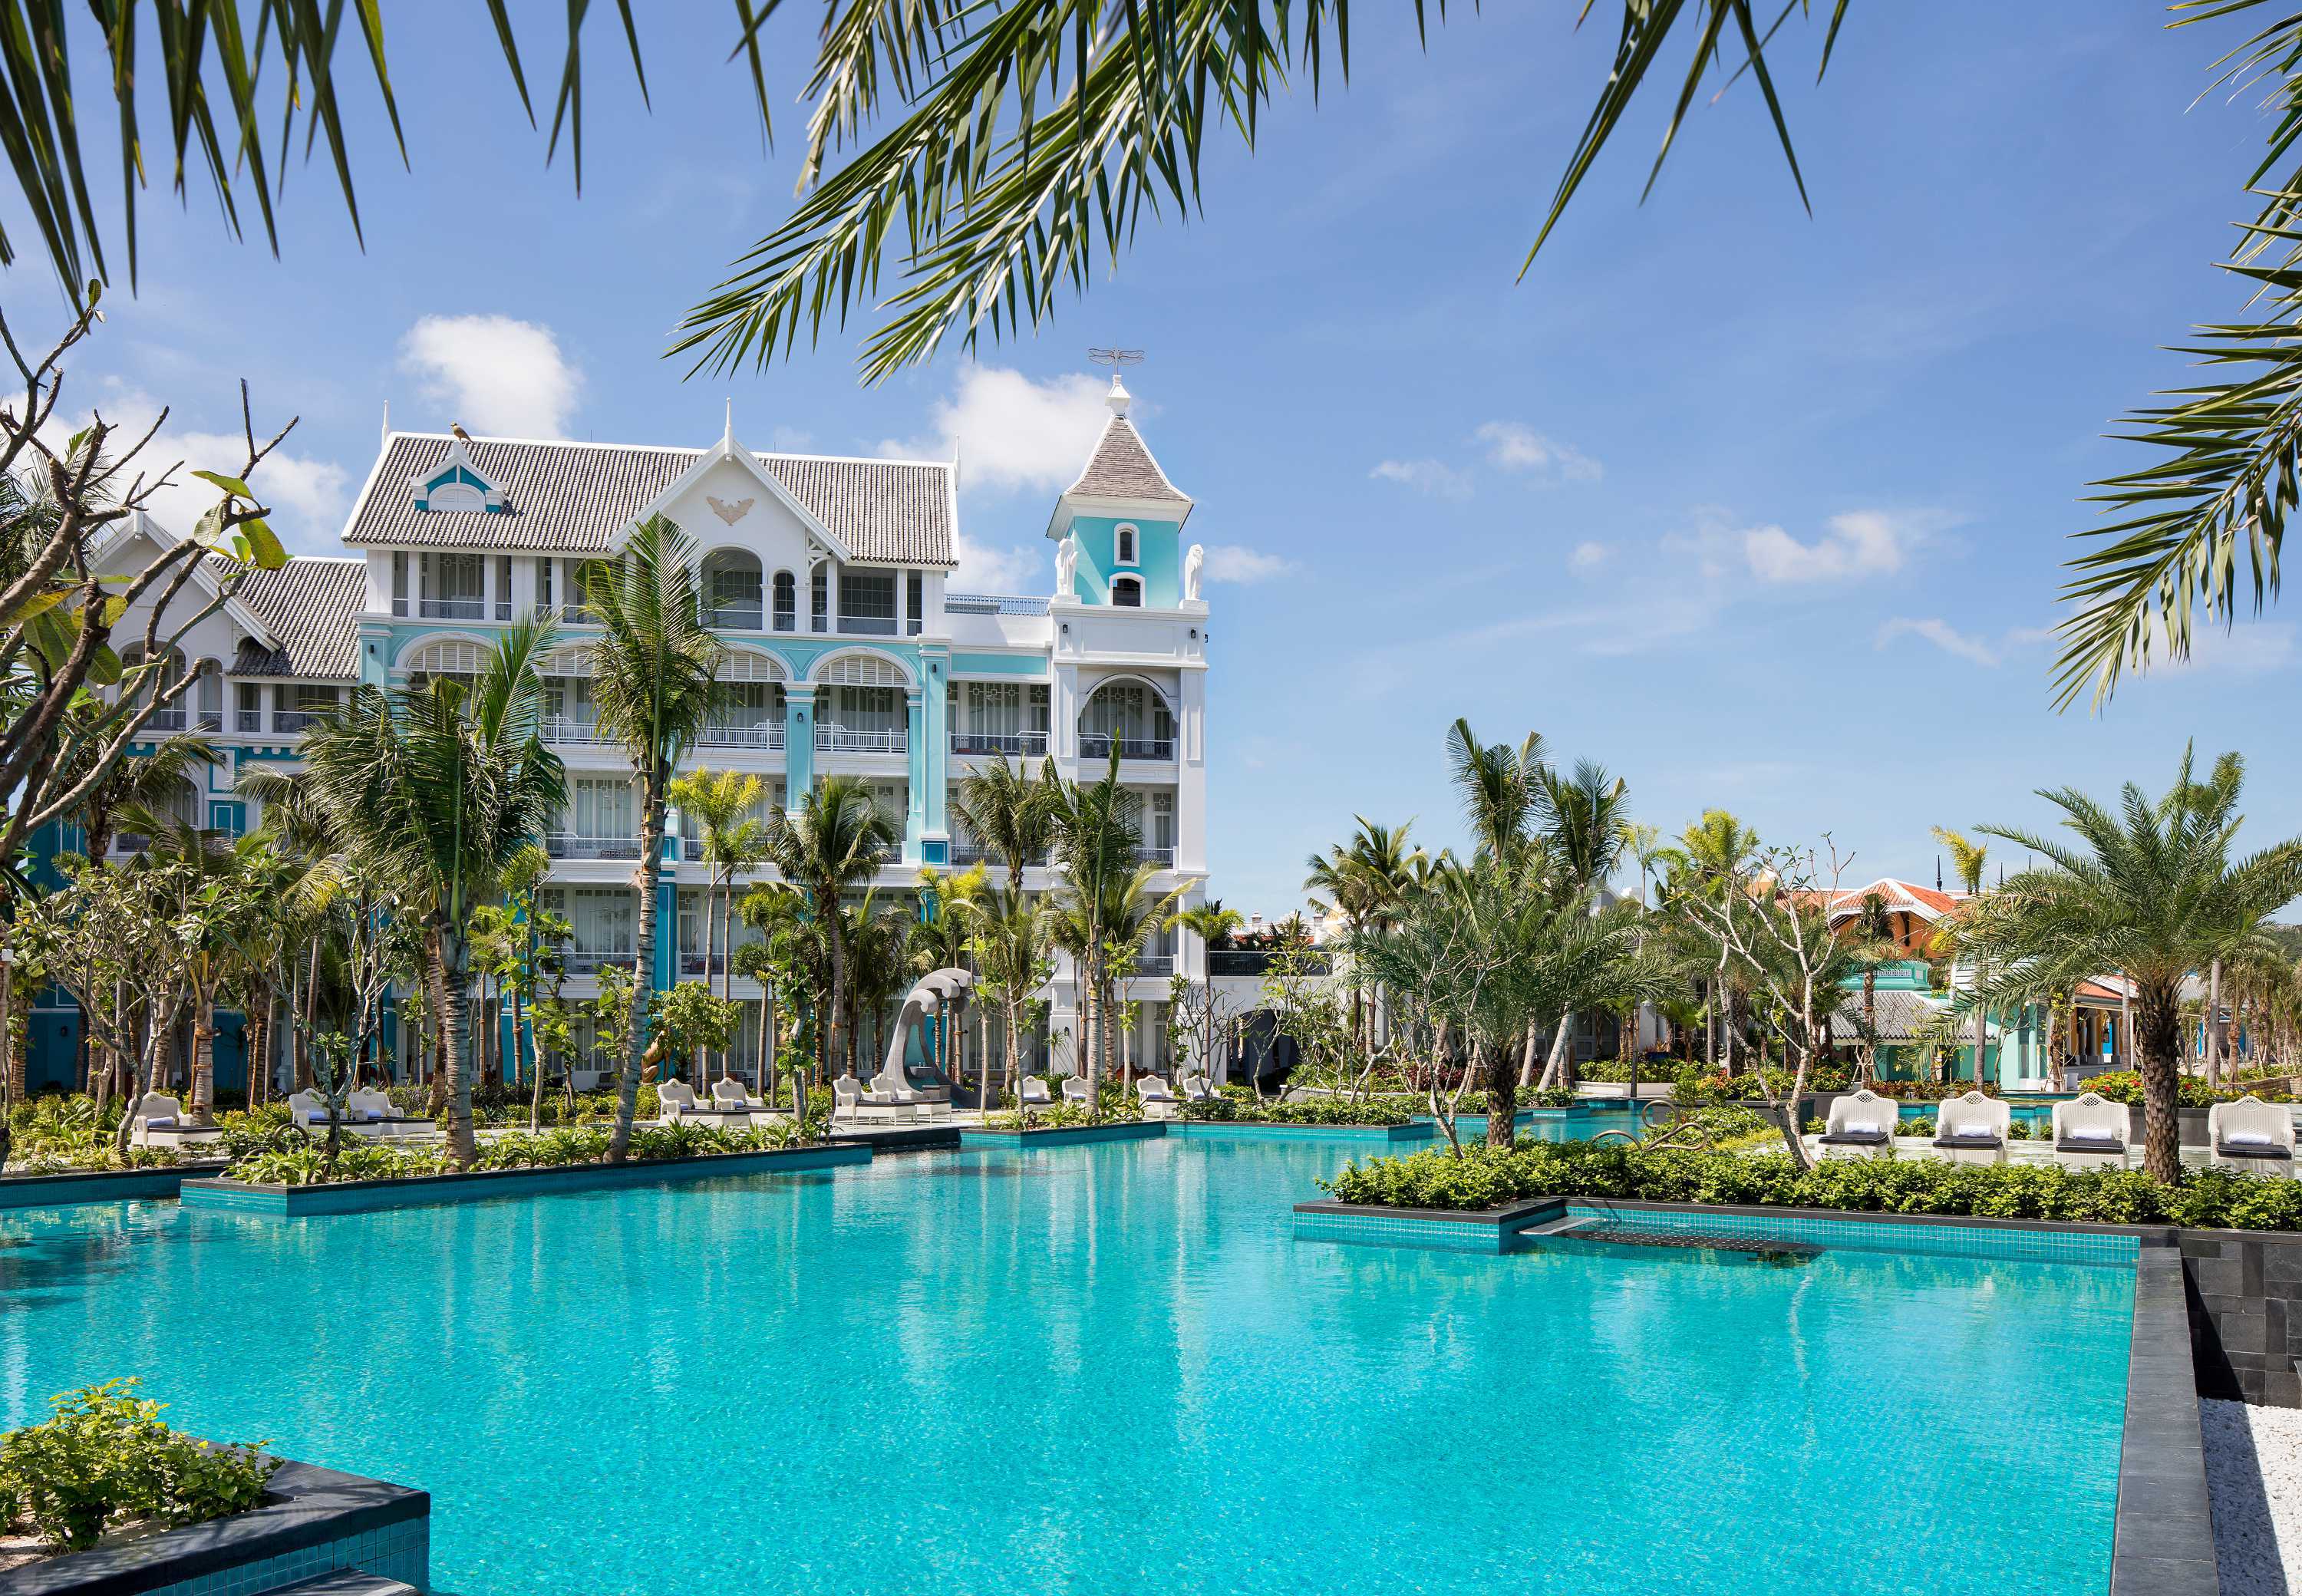 Photo of JW Marriott Phu Quoc Emerald Bay Resort & Spa, Phu Quoc City,Kien Giang Province,, Vietnam